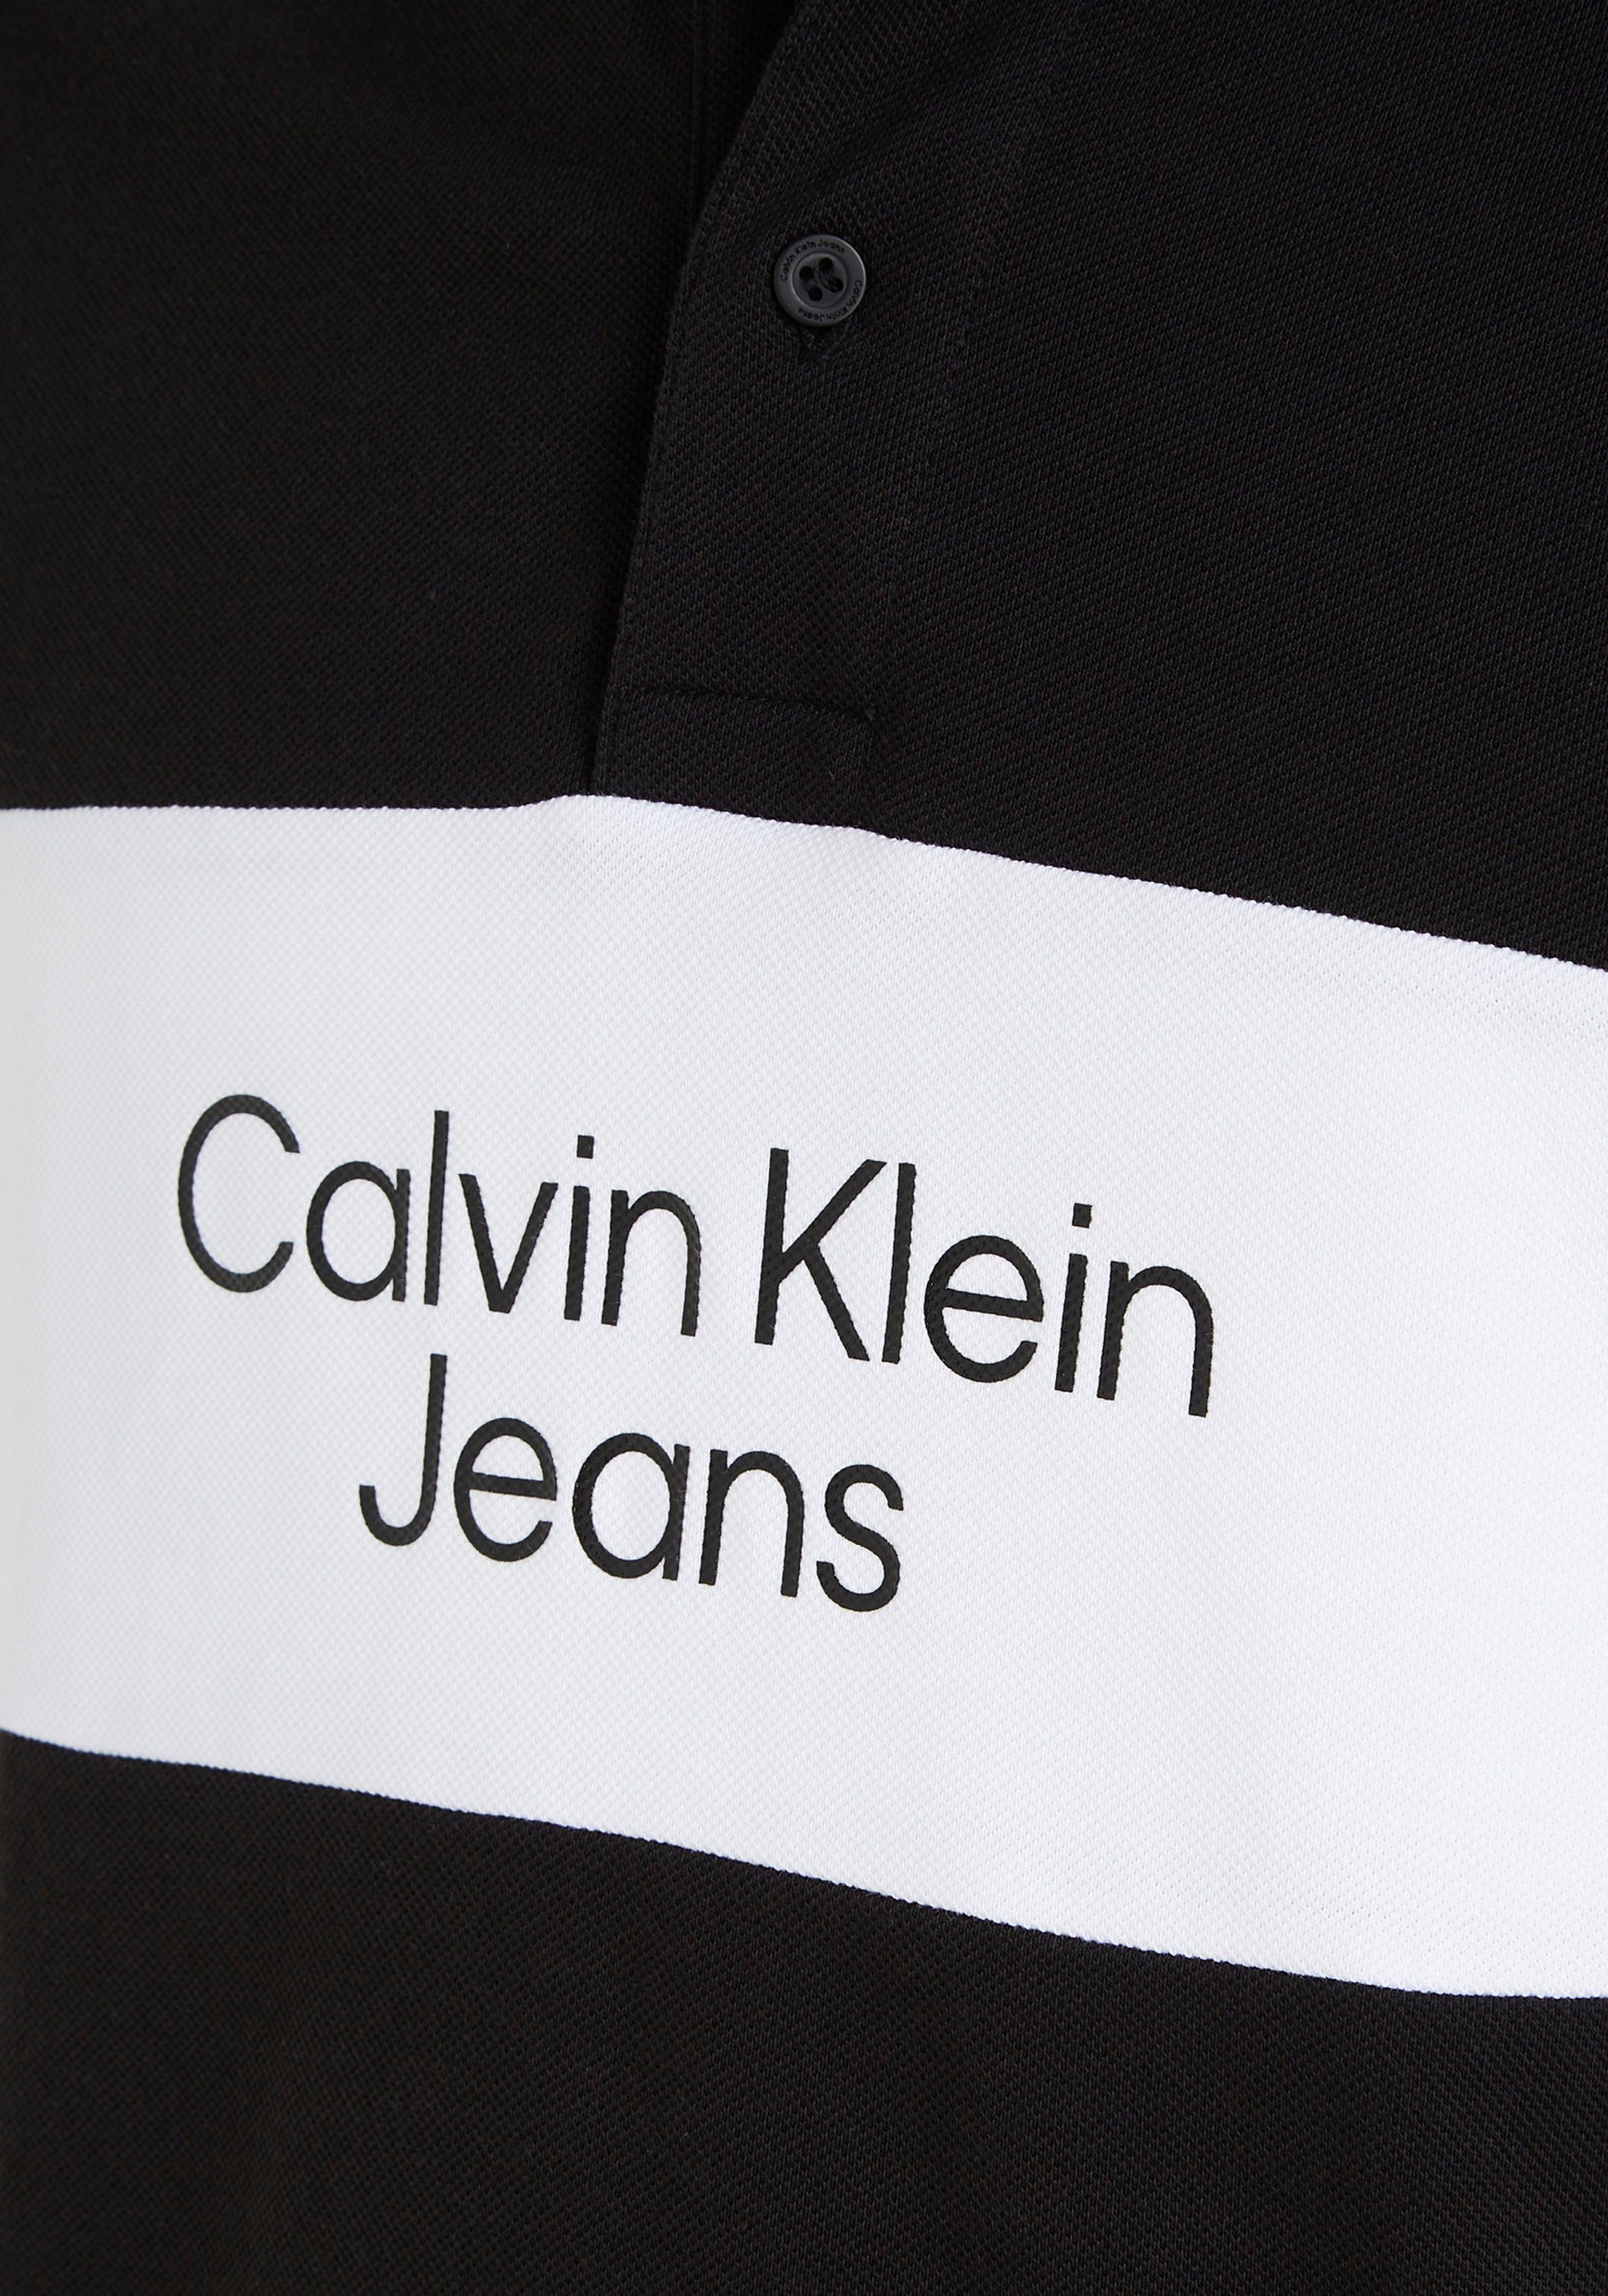 COLORBLOCK Poloshirt Logo Brust Calvin Calvin mit Klein Jeans Klein der POLO LOGO Colorblock auf